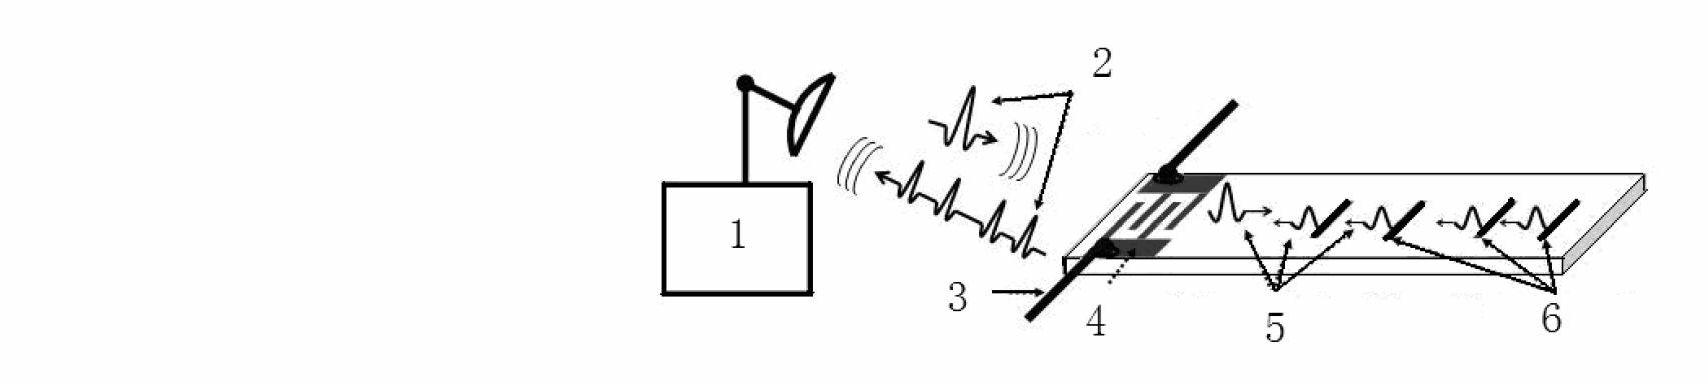 Surface acoustic wave radio frequency identification tag of interdigital transducer / zinc oxide / aluminum (IDT / ZnO / AL) / diamond multilayer membrane structure